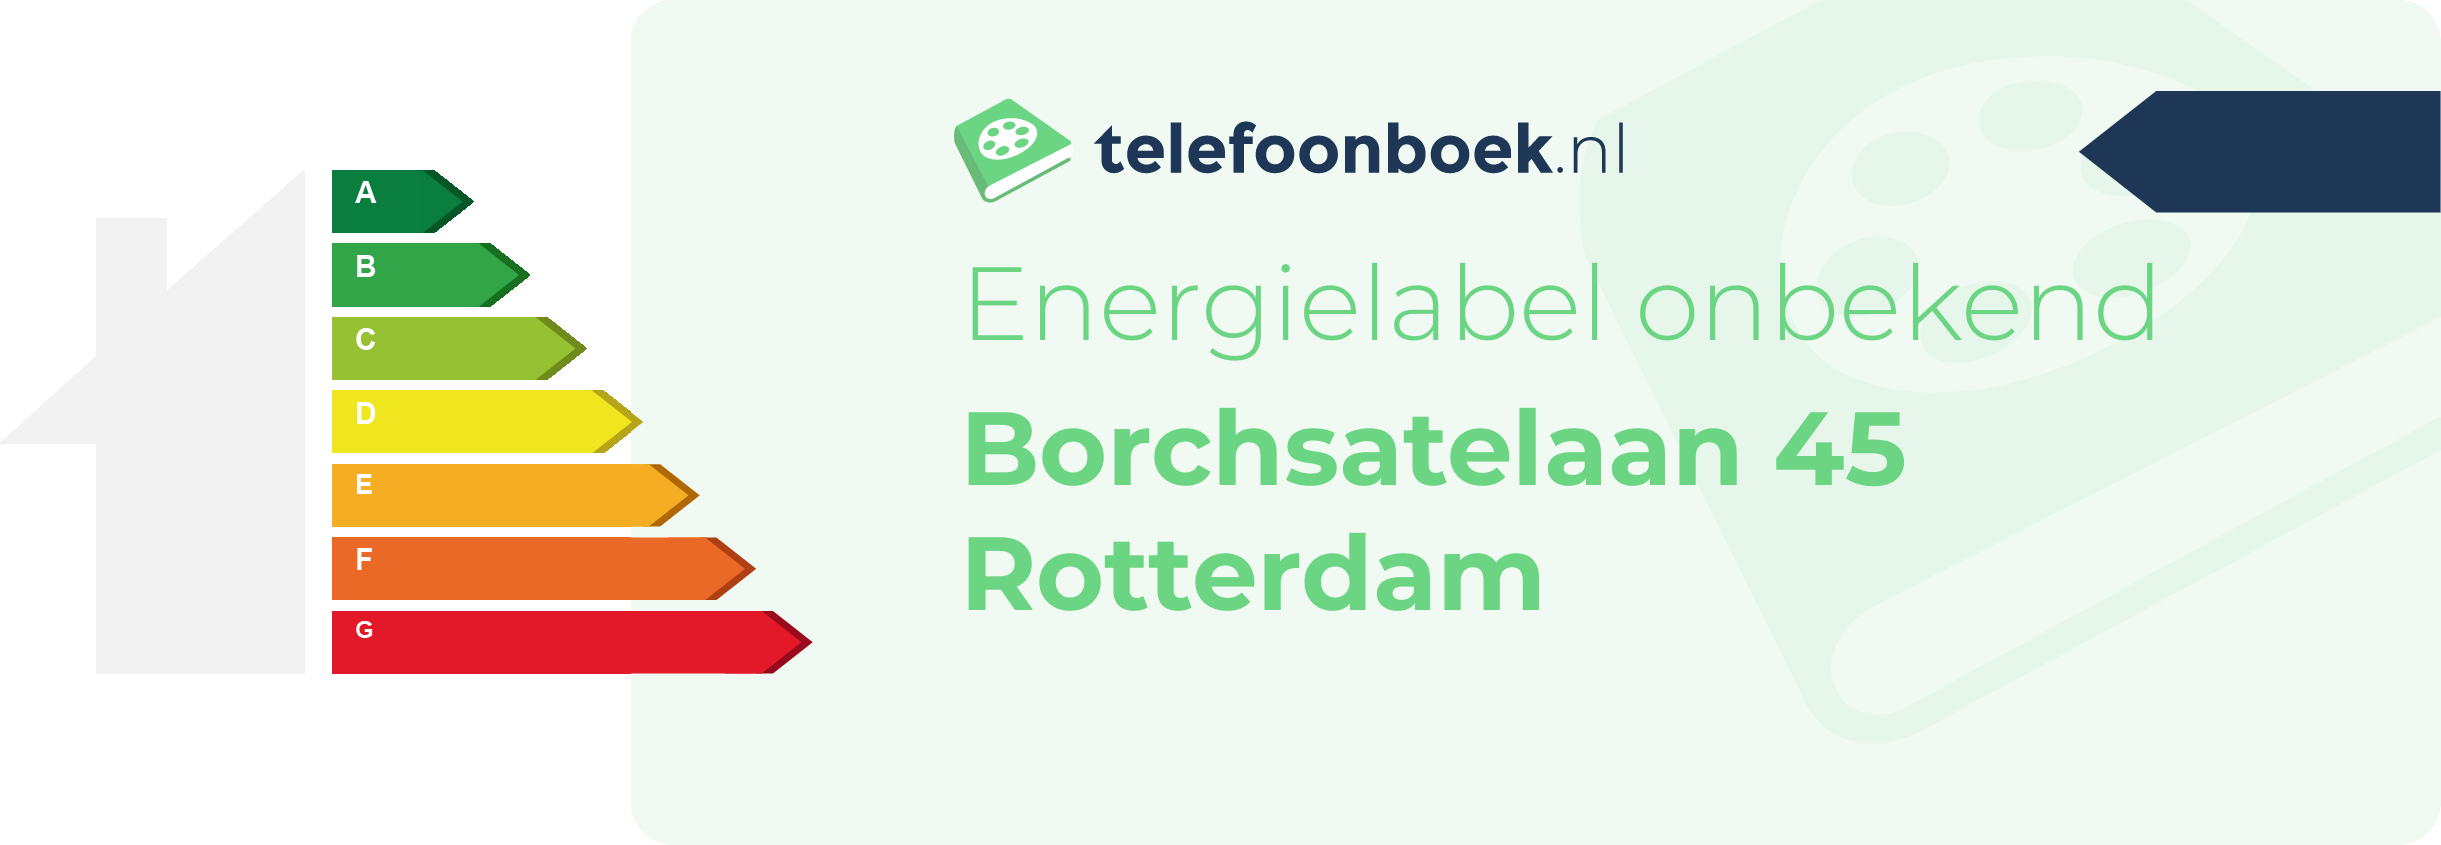 Energielabel Borchsatelaan 45 Rotterdam